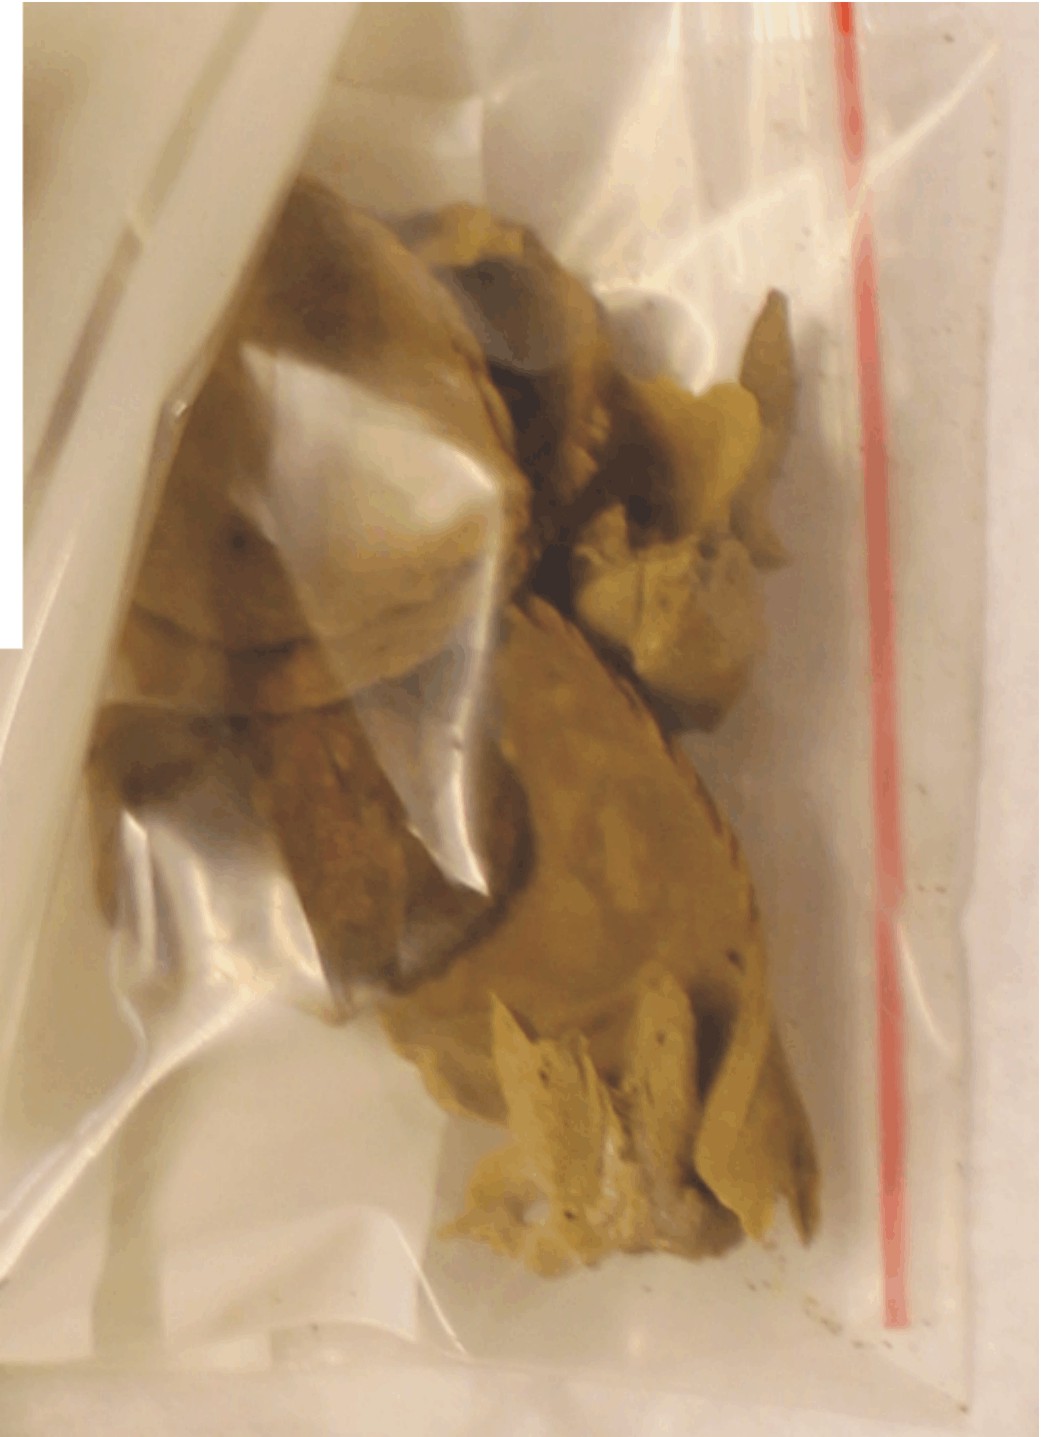 Image for: Fragment of a bird skull